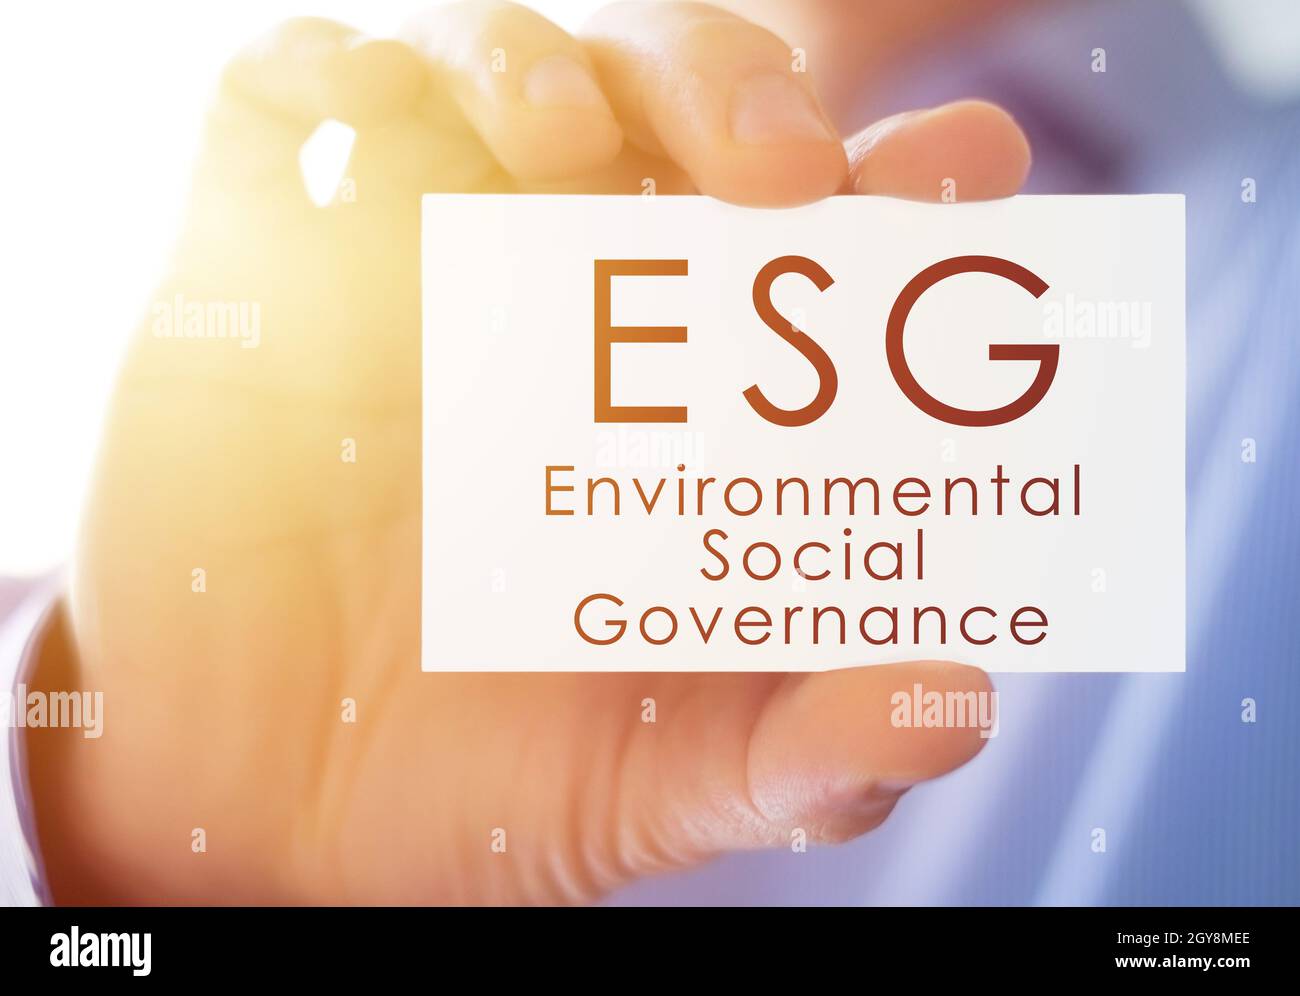 ESG environmental social governance business card Stock Photo